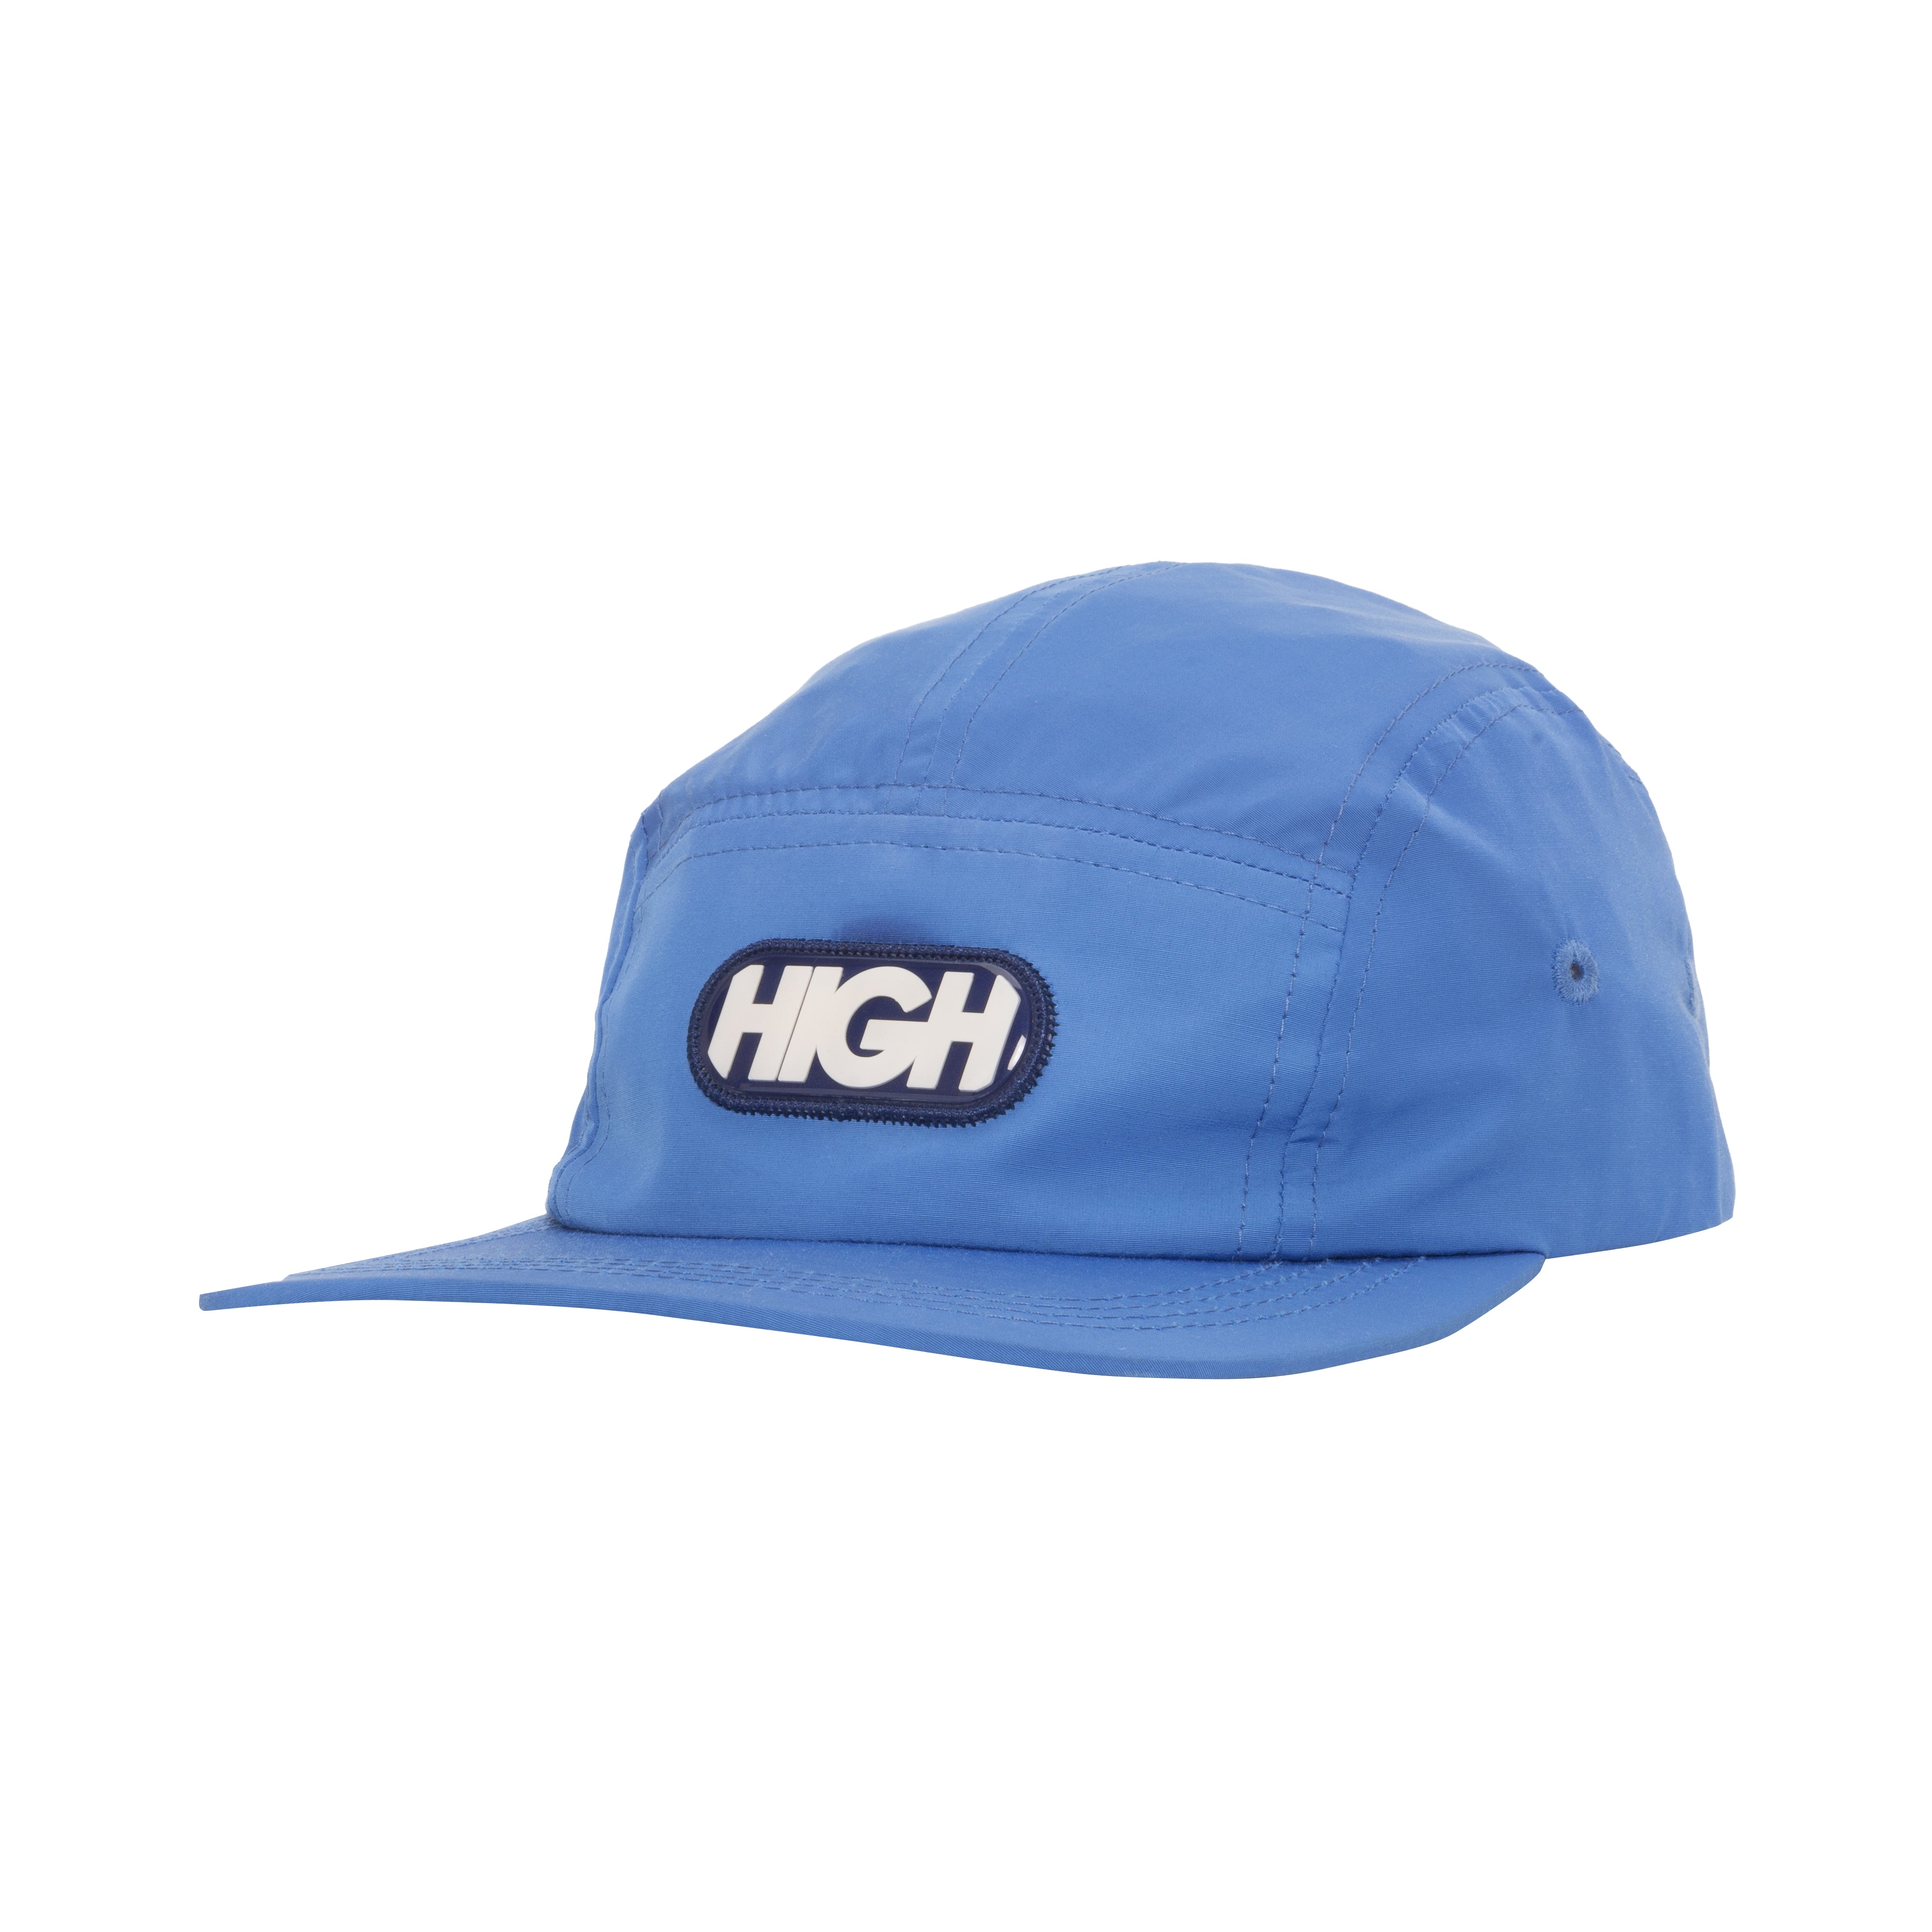 HIGH - 5 Panel Capsule Blue